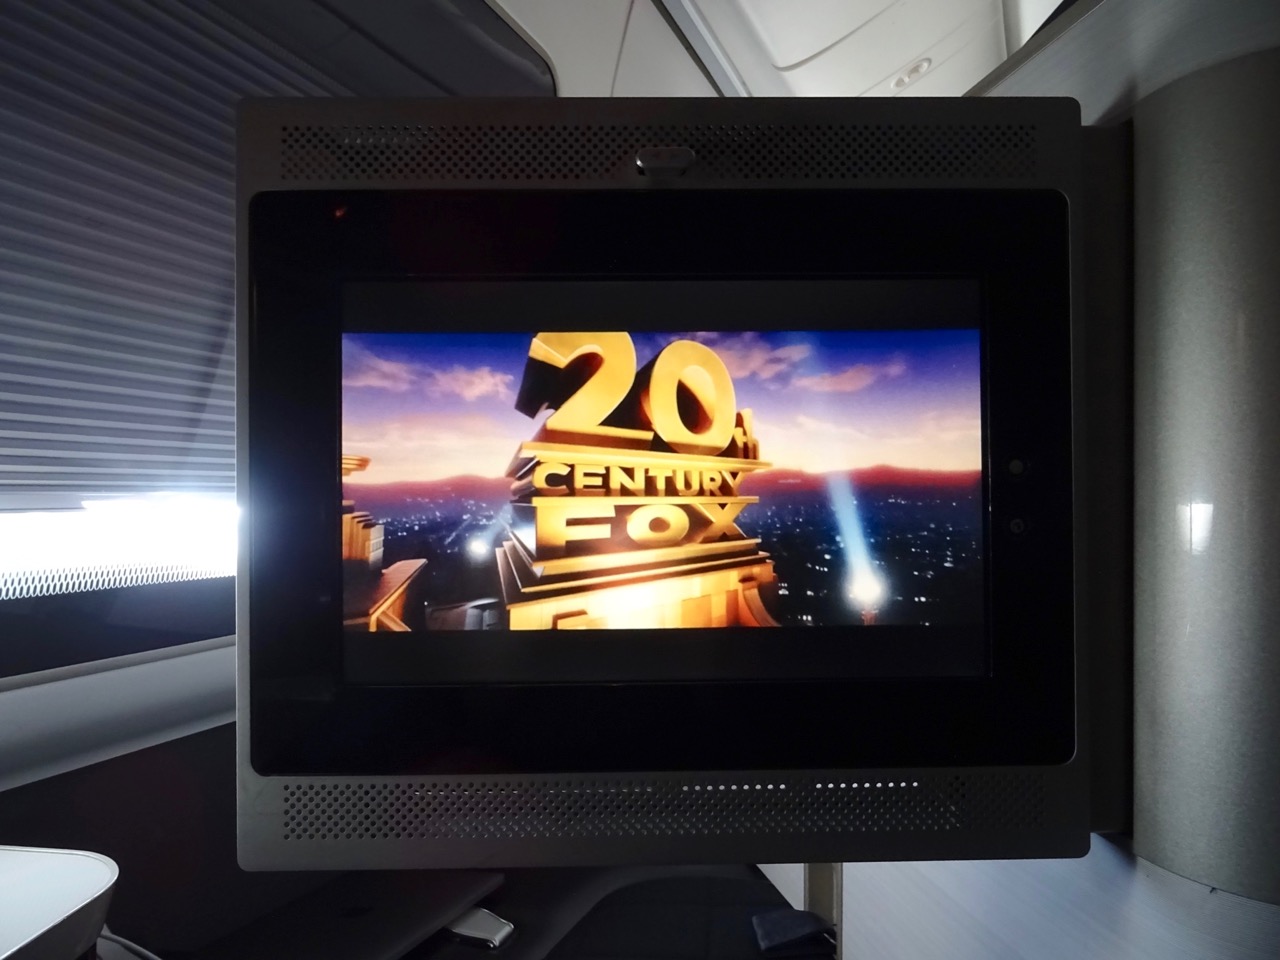 British Airways 777 First Class inflight entertainment screen